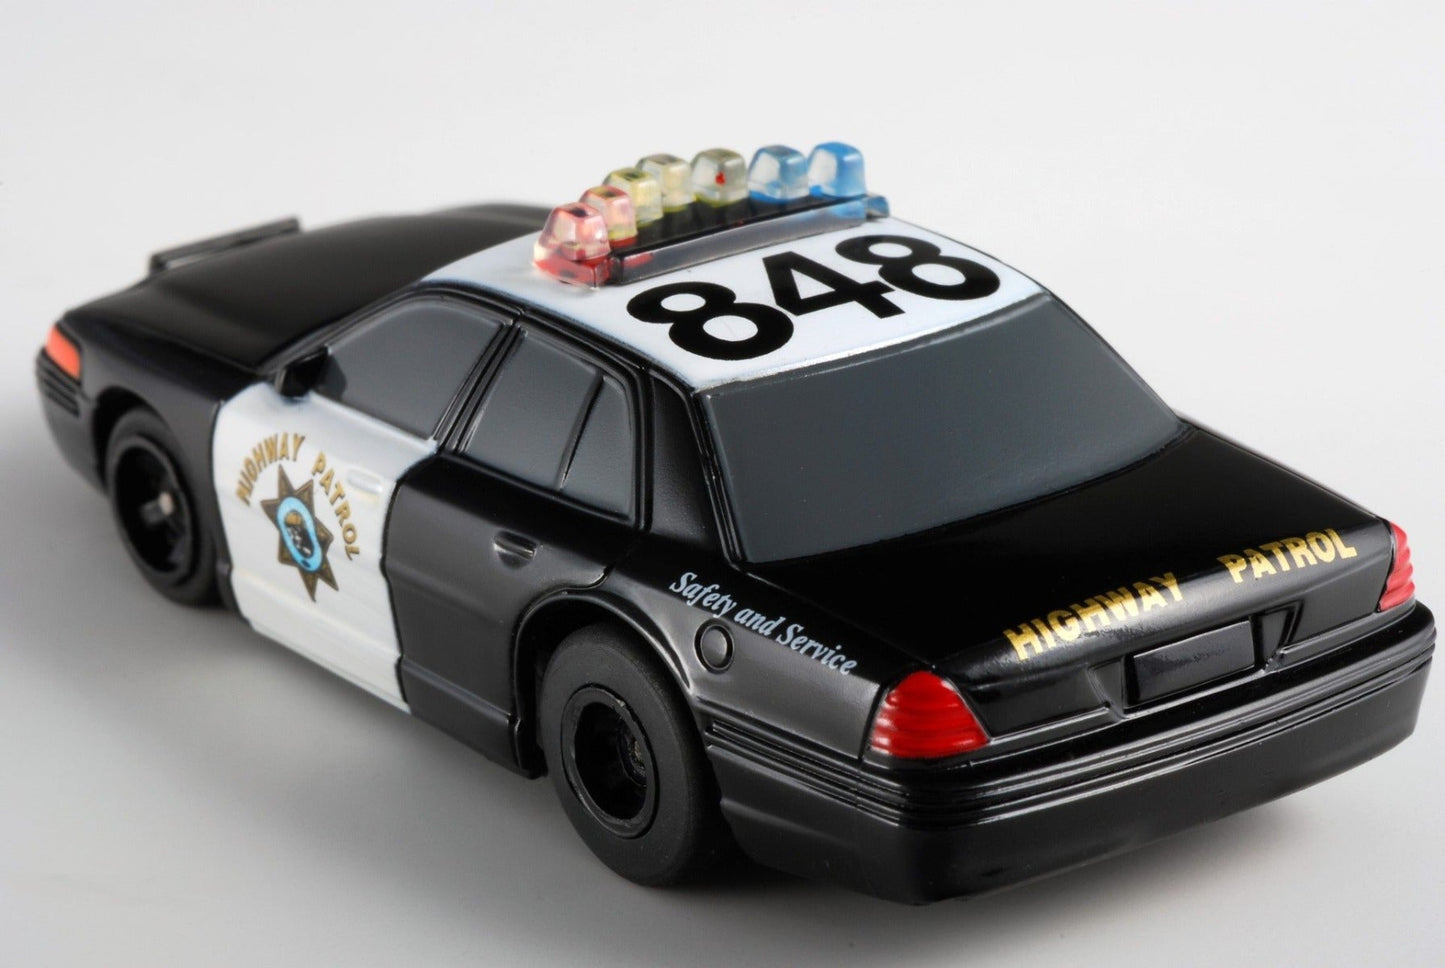 AFX 21034 Highway Patrol #848 Police MegeG+ Mega G+ Ho slot car AFX21034 - PowerHobby